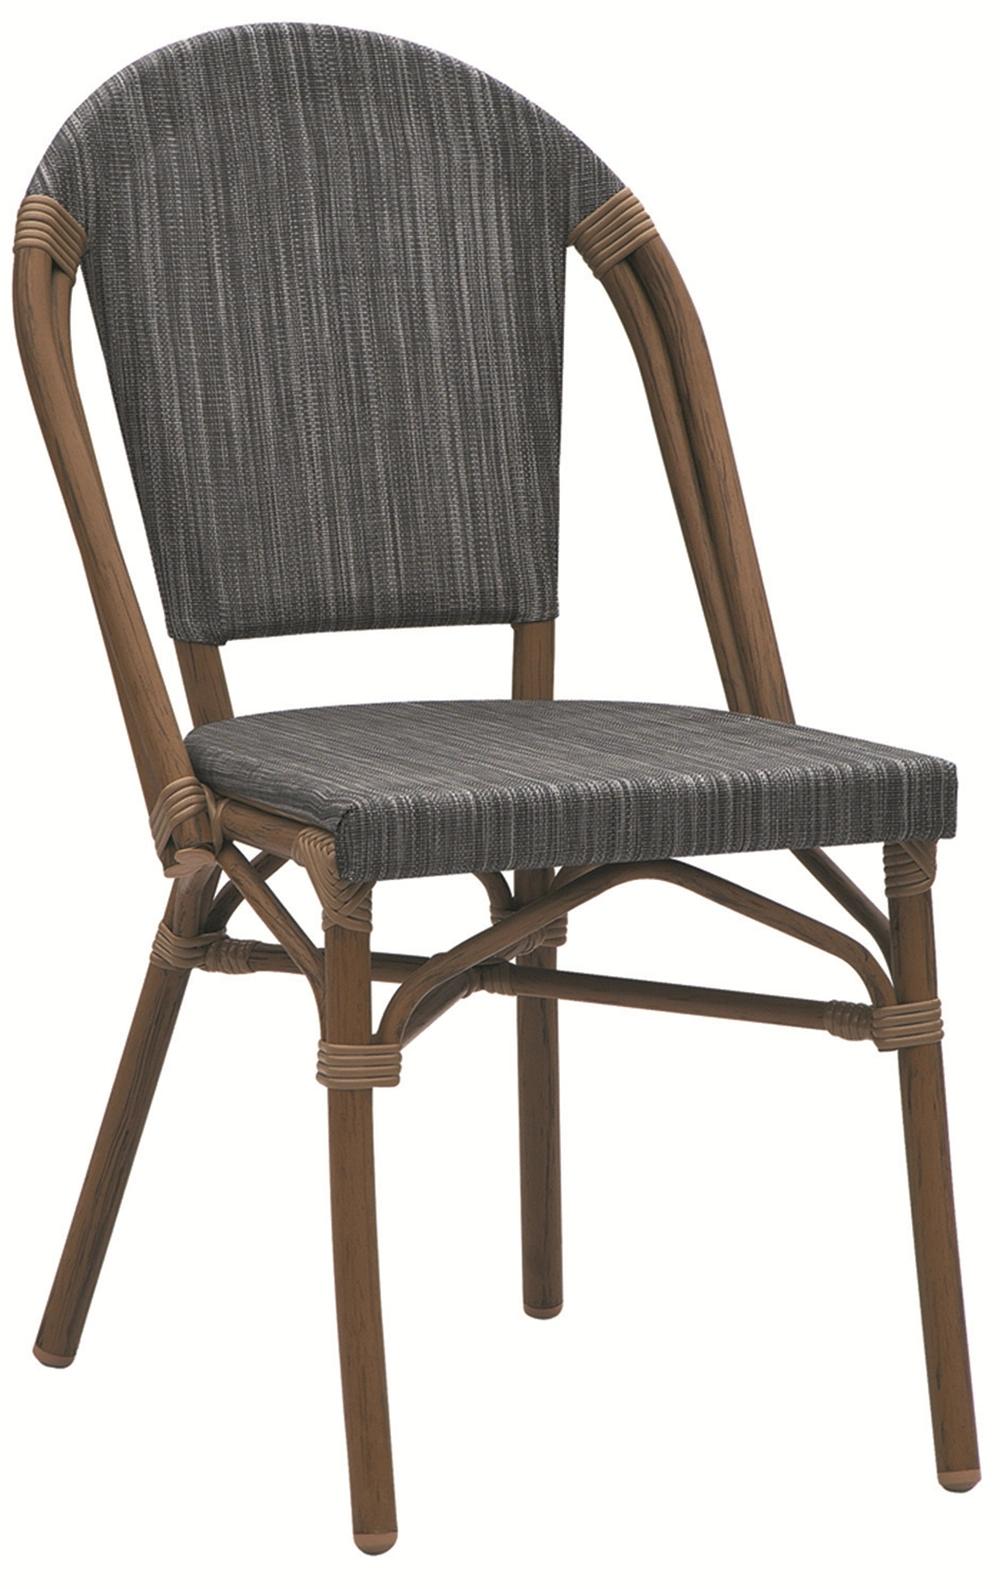 Anti UV Never Fading Color Low Price Fabric Outdoor Chair Aluminum Plastic Furniture